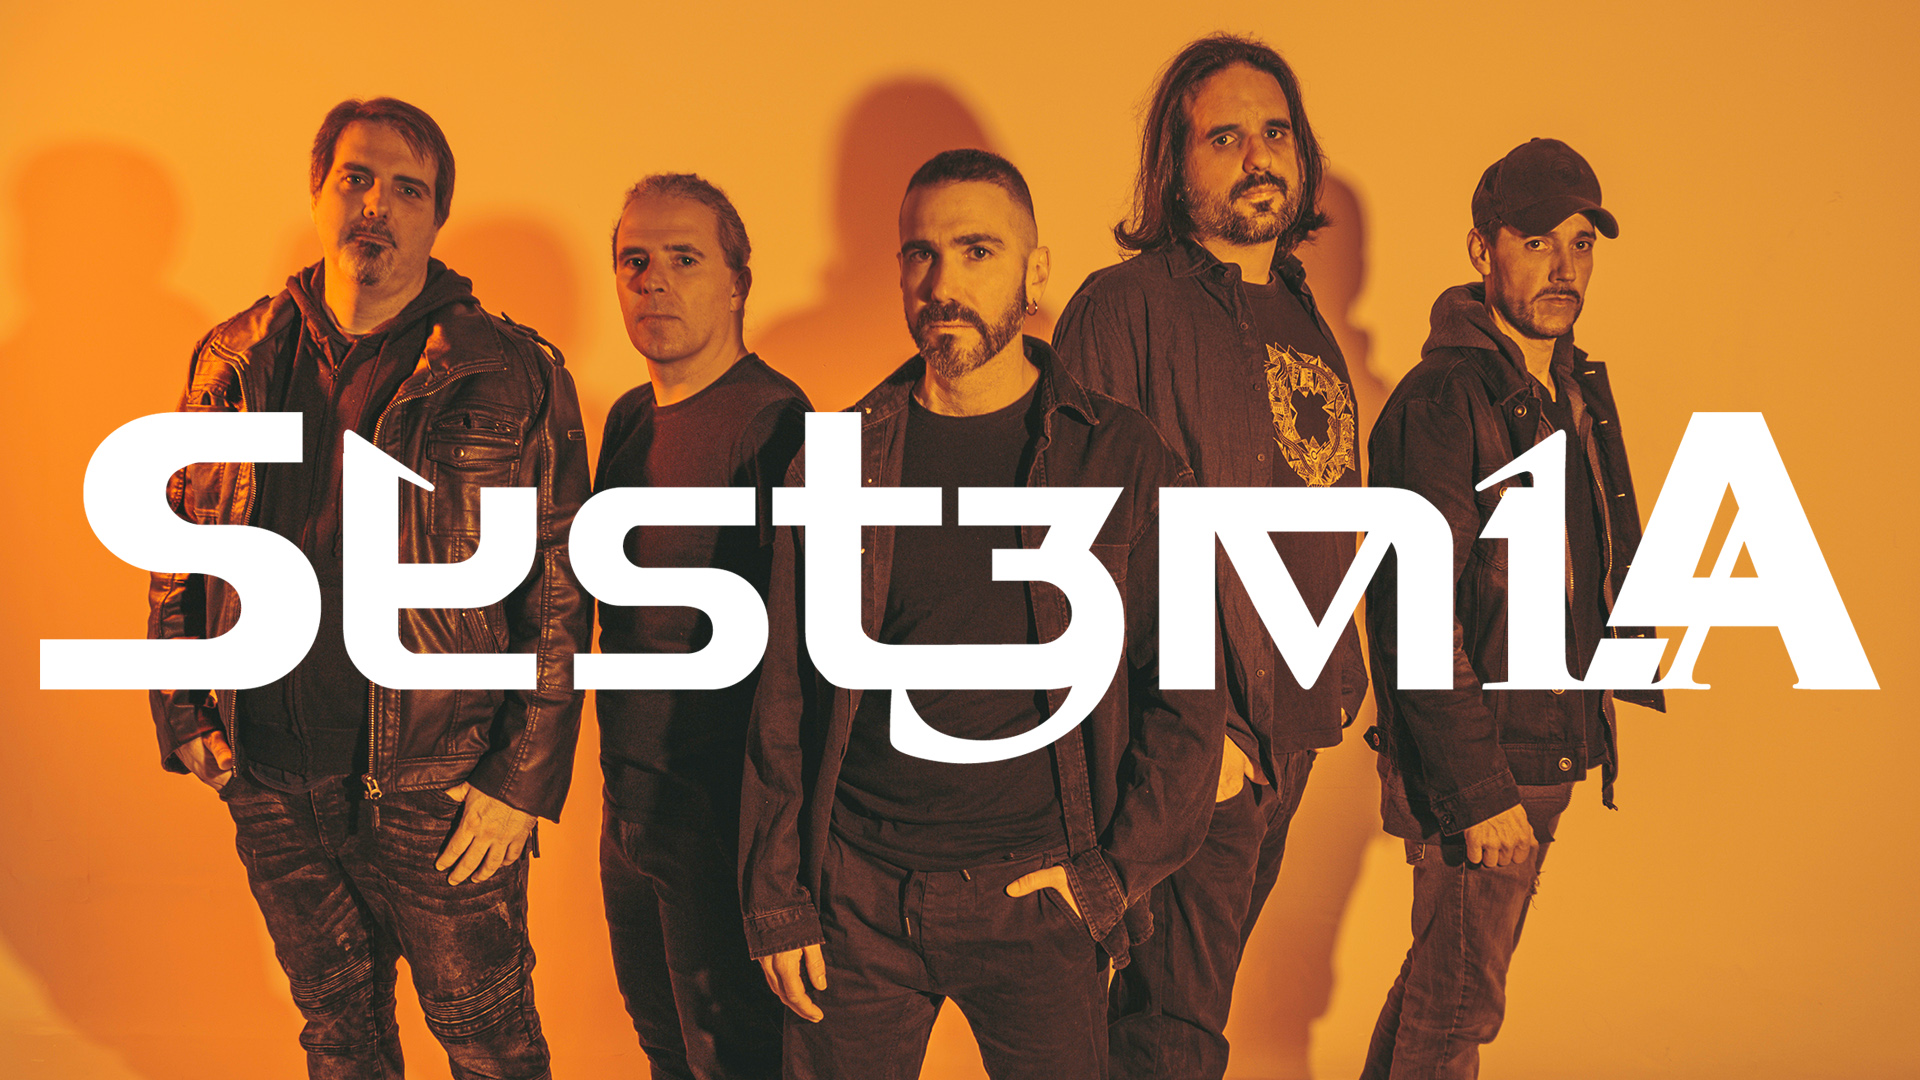 La banda de metal progresivo Systemia estrena su nuevo álbum “Chronos”